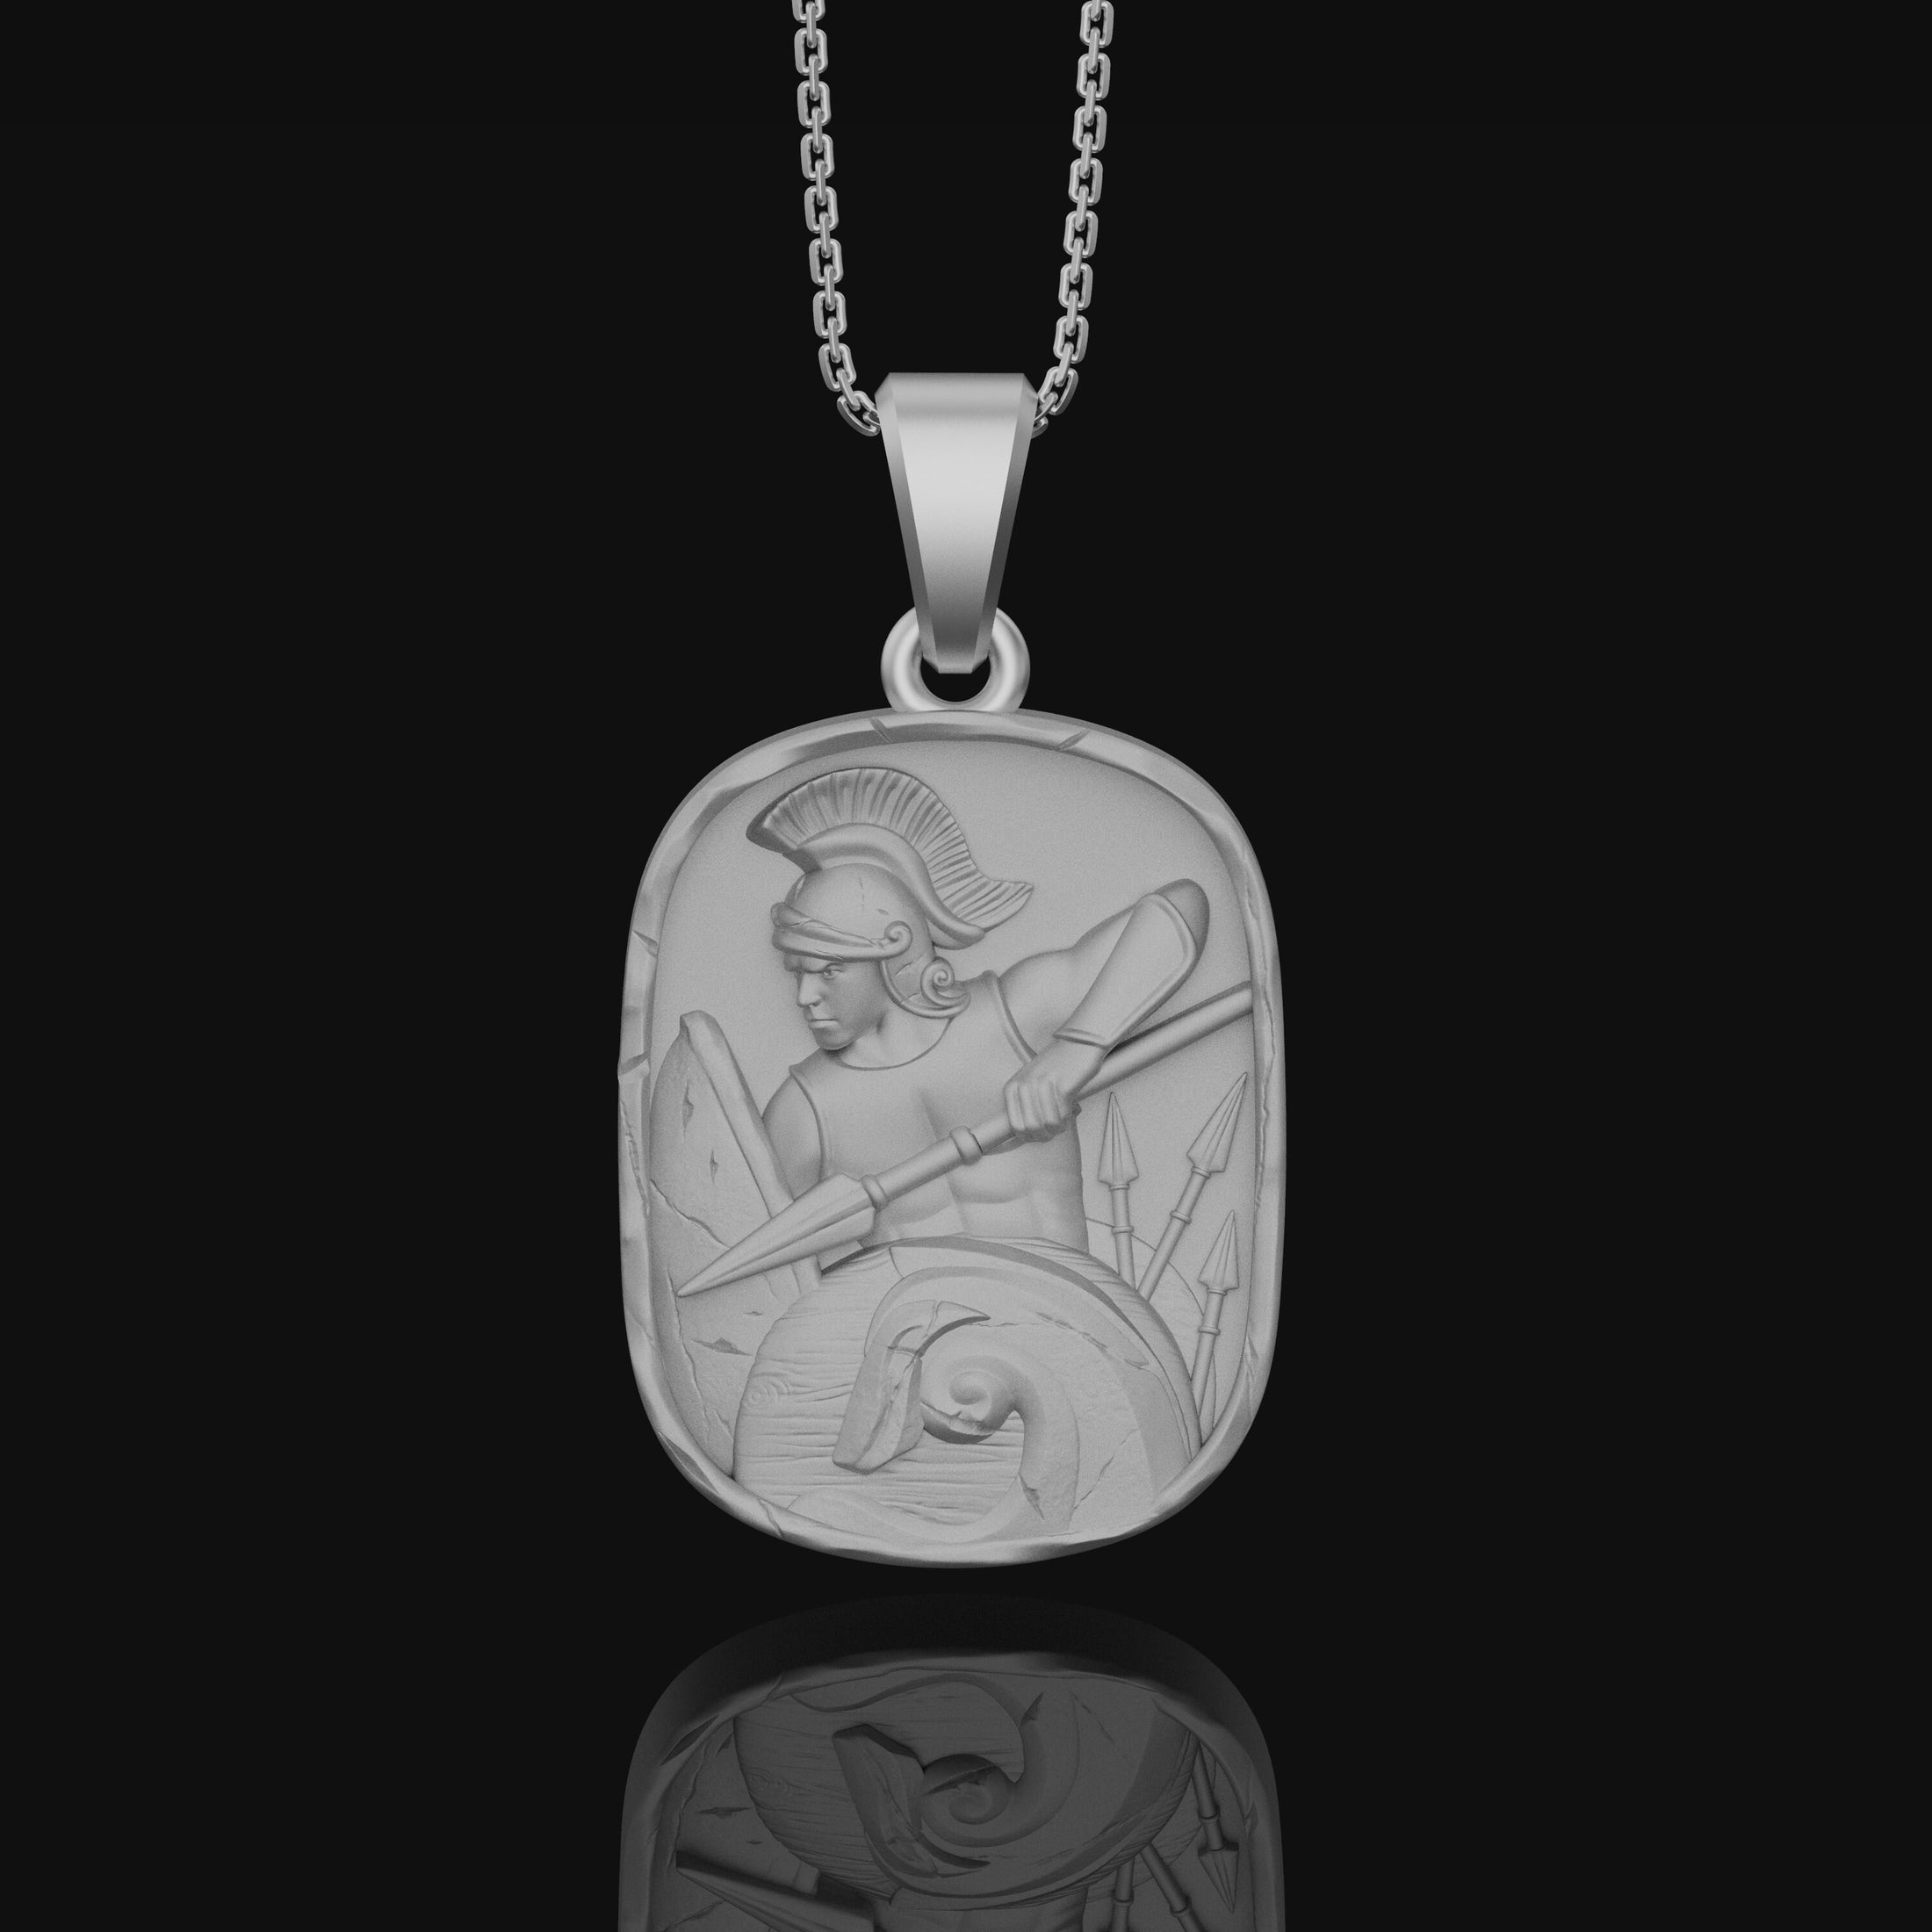 Ancient Rome, Warrior Necklace, Spartan Pendant, Julius Caesar, Honor Token, Roman Jewelry, Gift for him, Strength Symbol